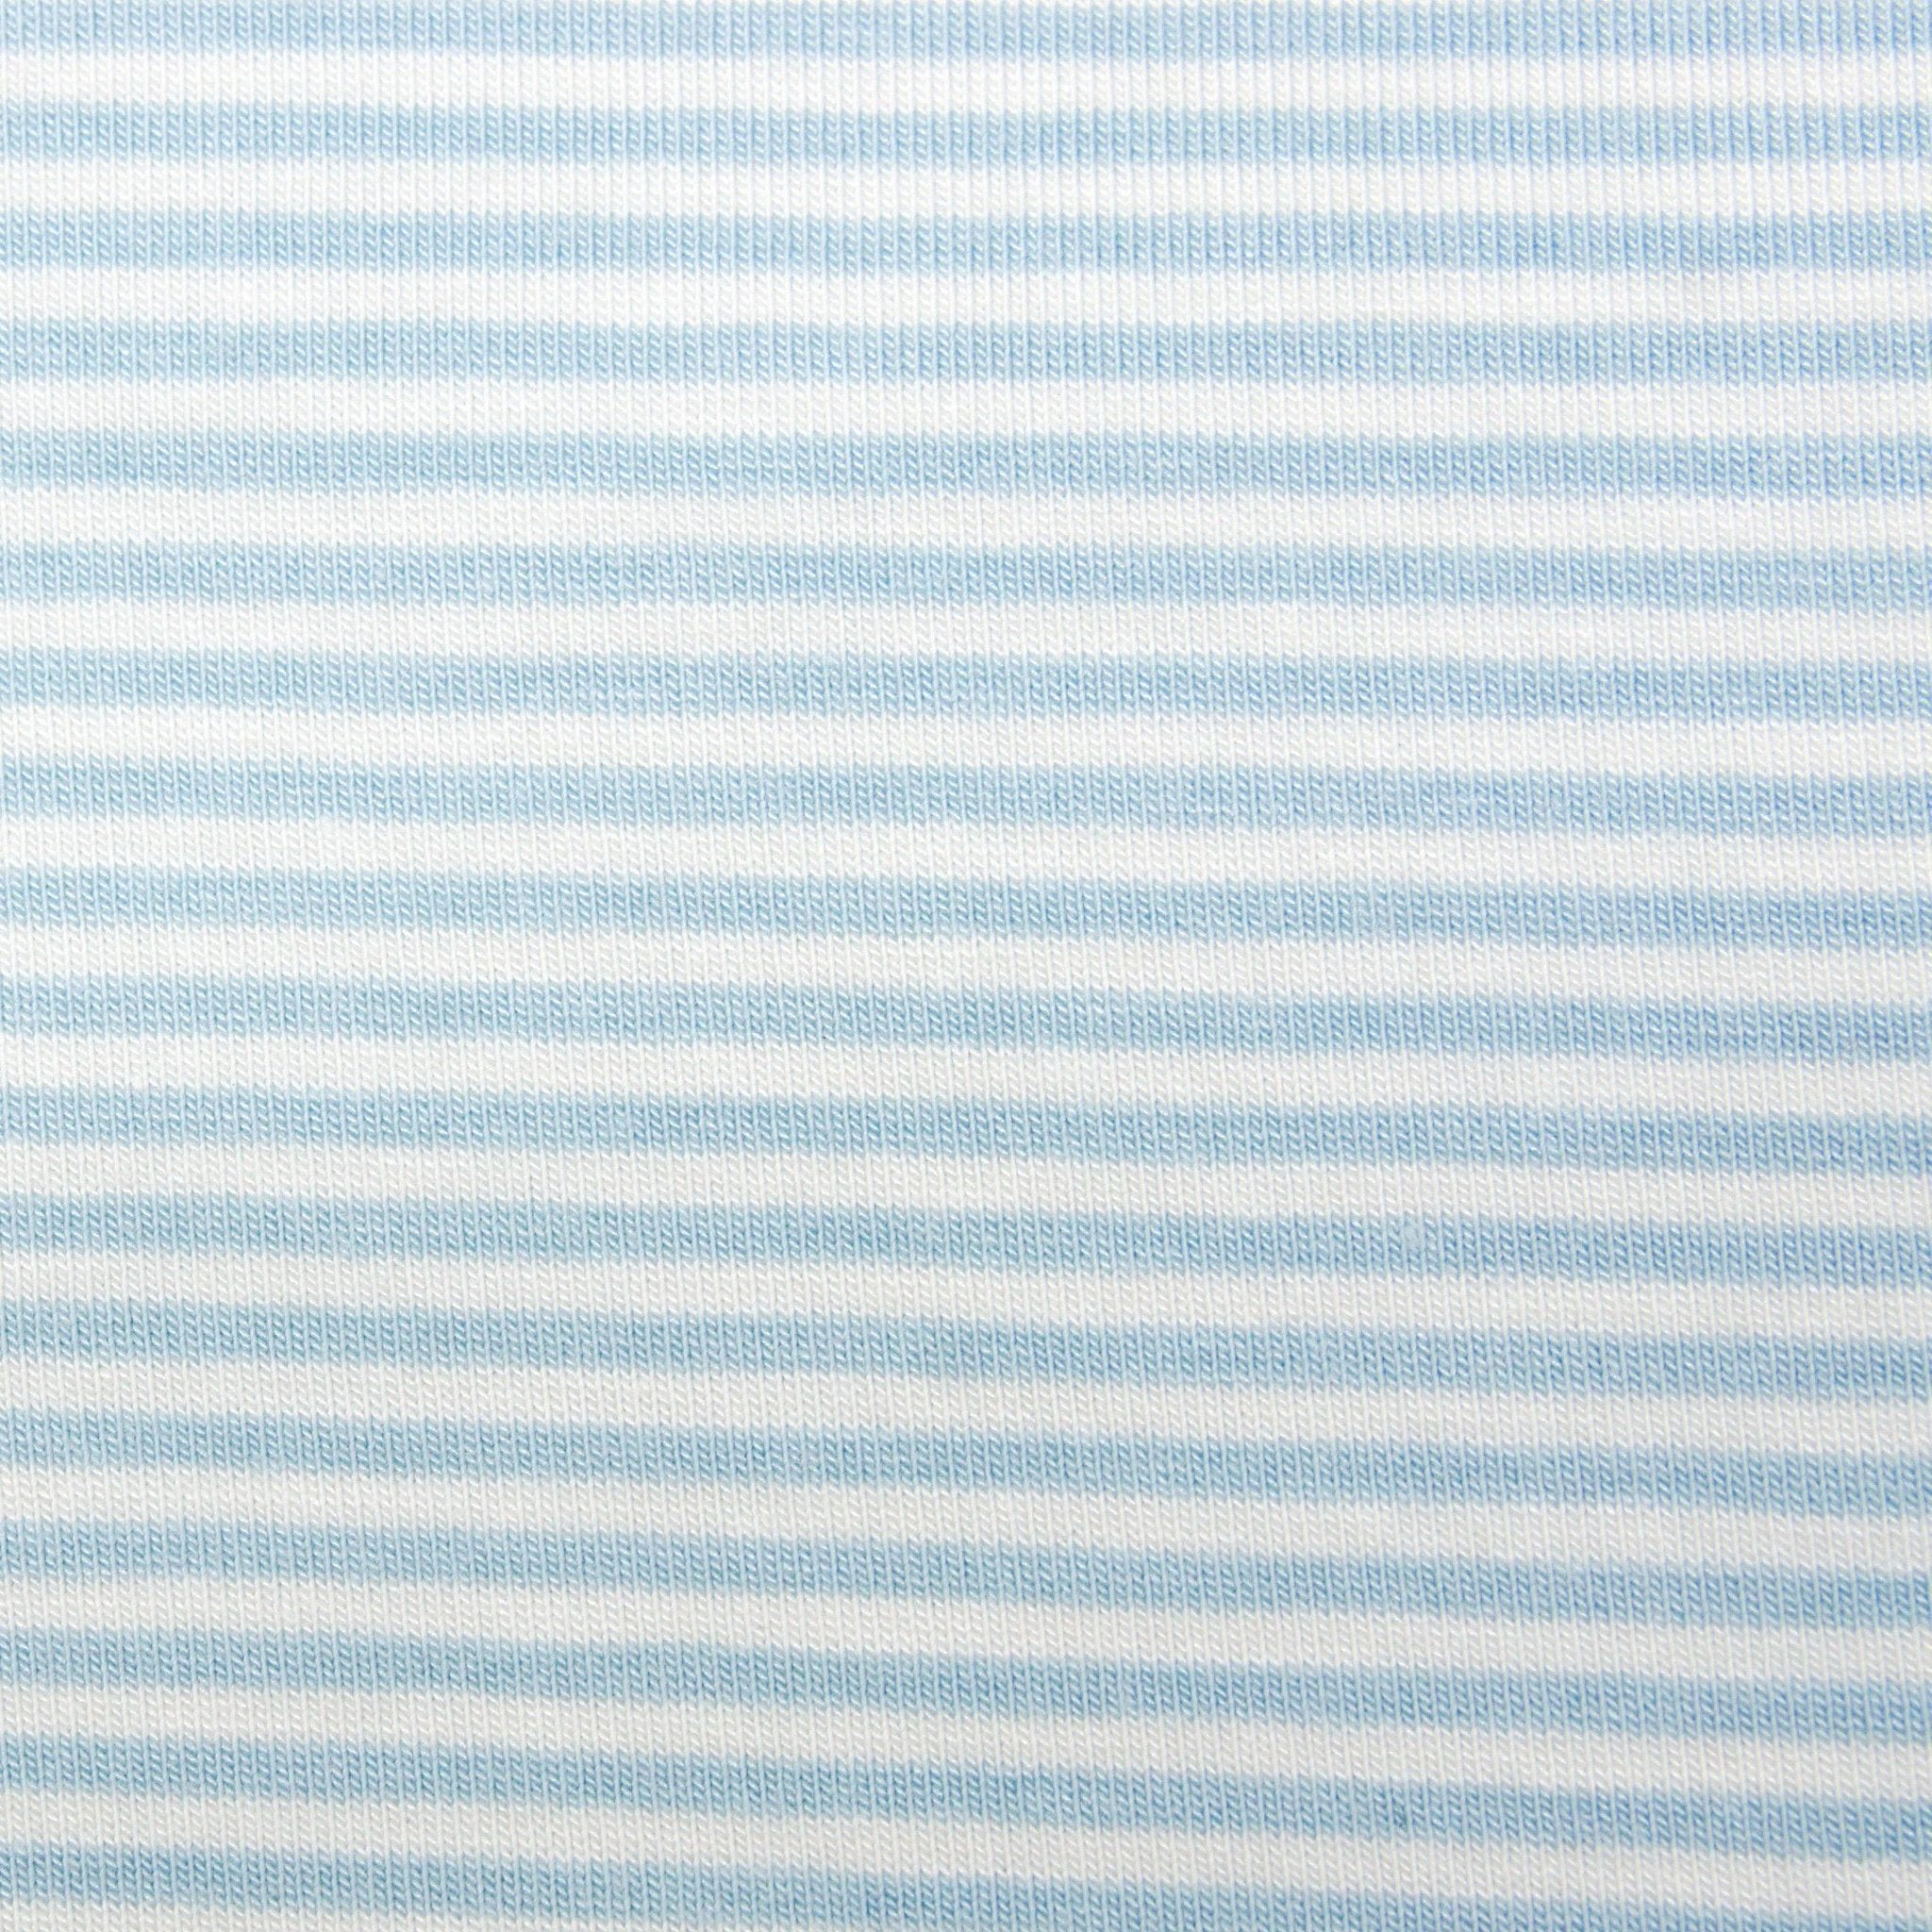 Bamboo Organic Cotton Spandex Jersey -  Powder Blue 2mm Stripes - Earth Indigo